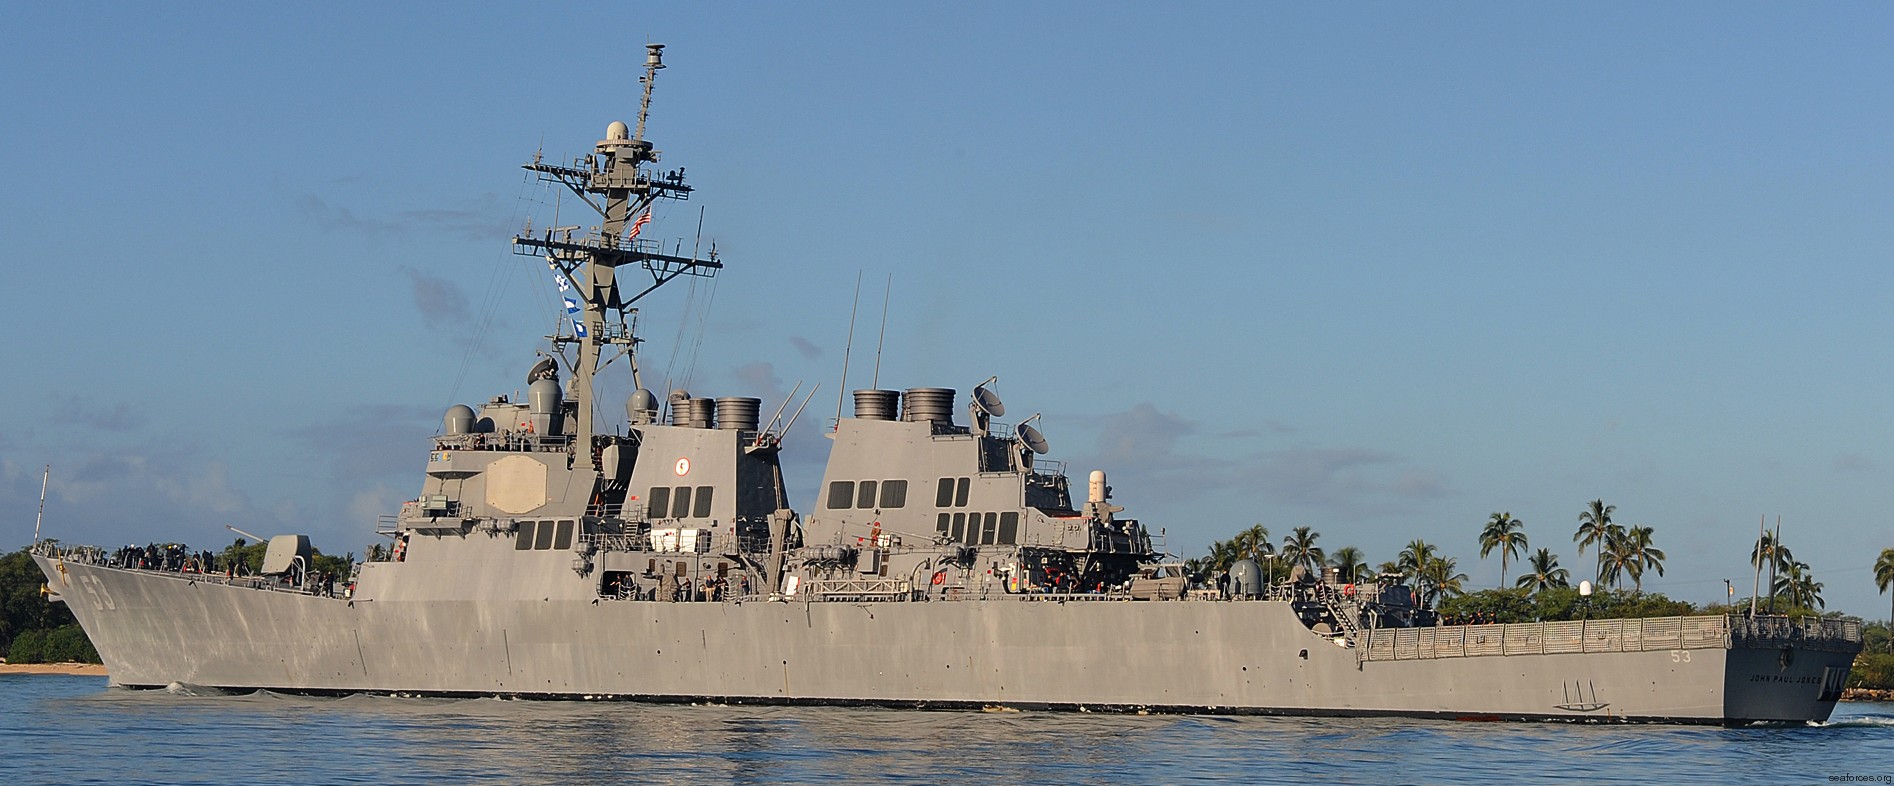 ddg-53 uss john paul jones destroyer us navy 51 joint base pearl harbor hickam hawaii